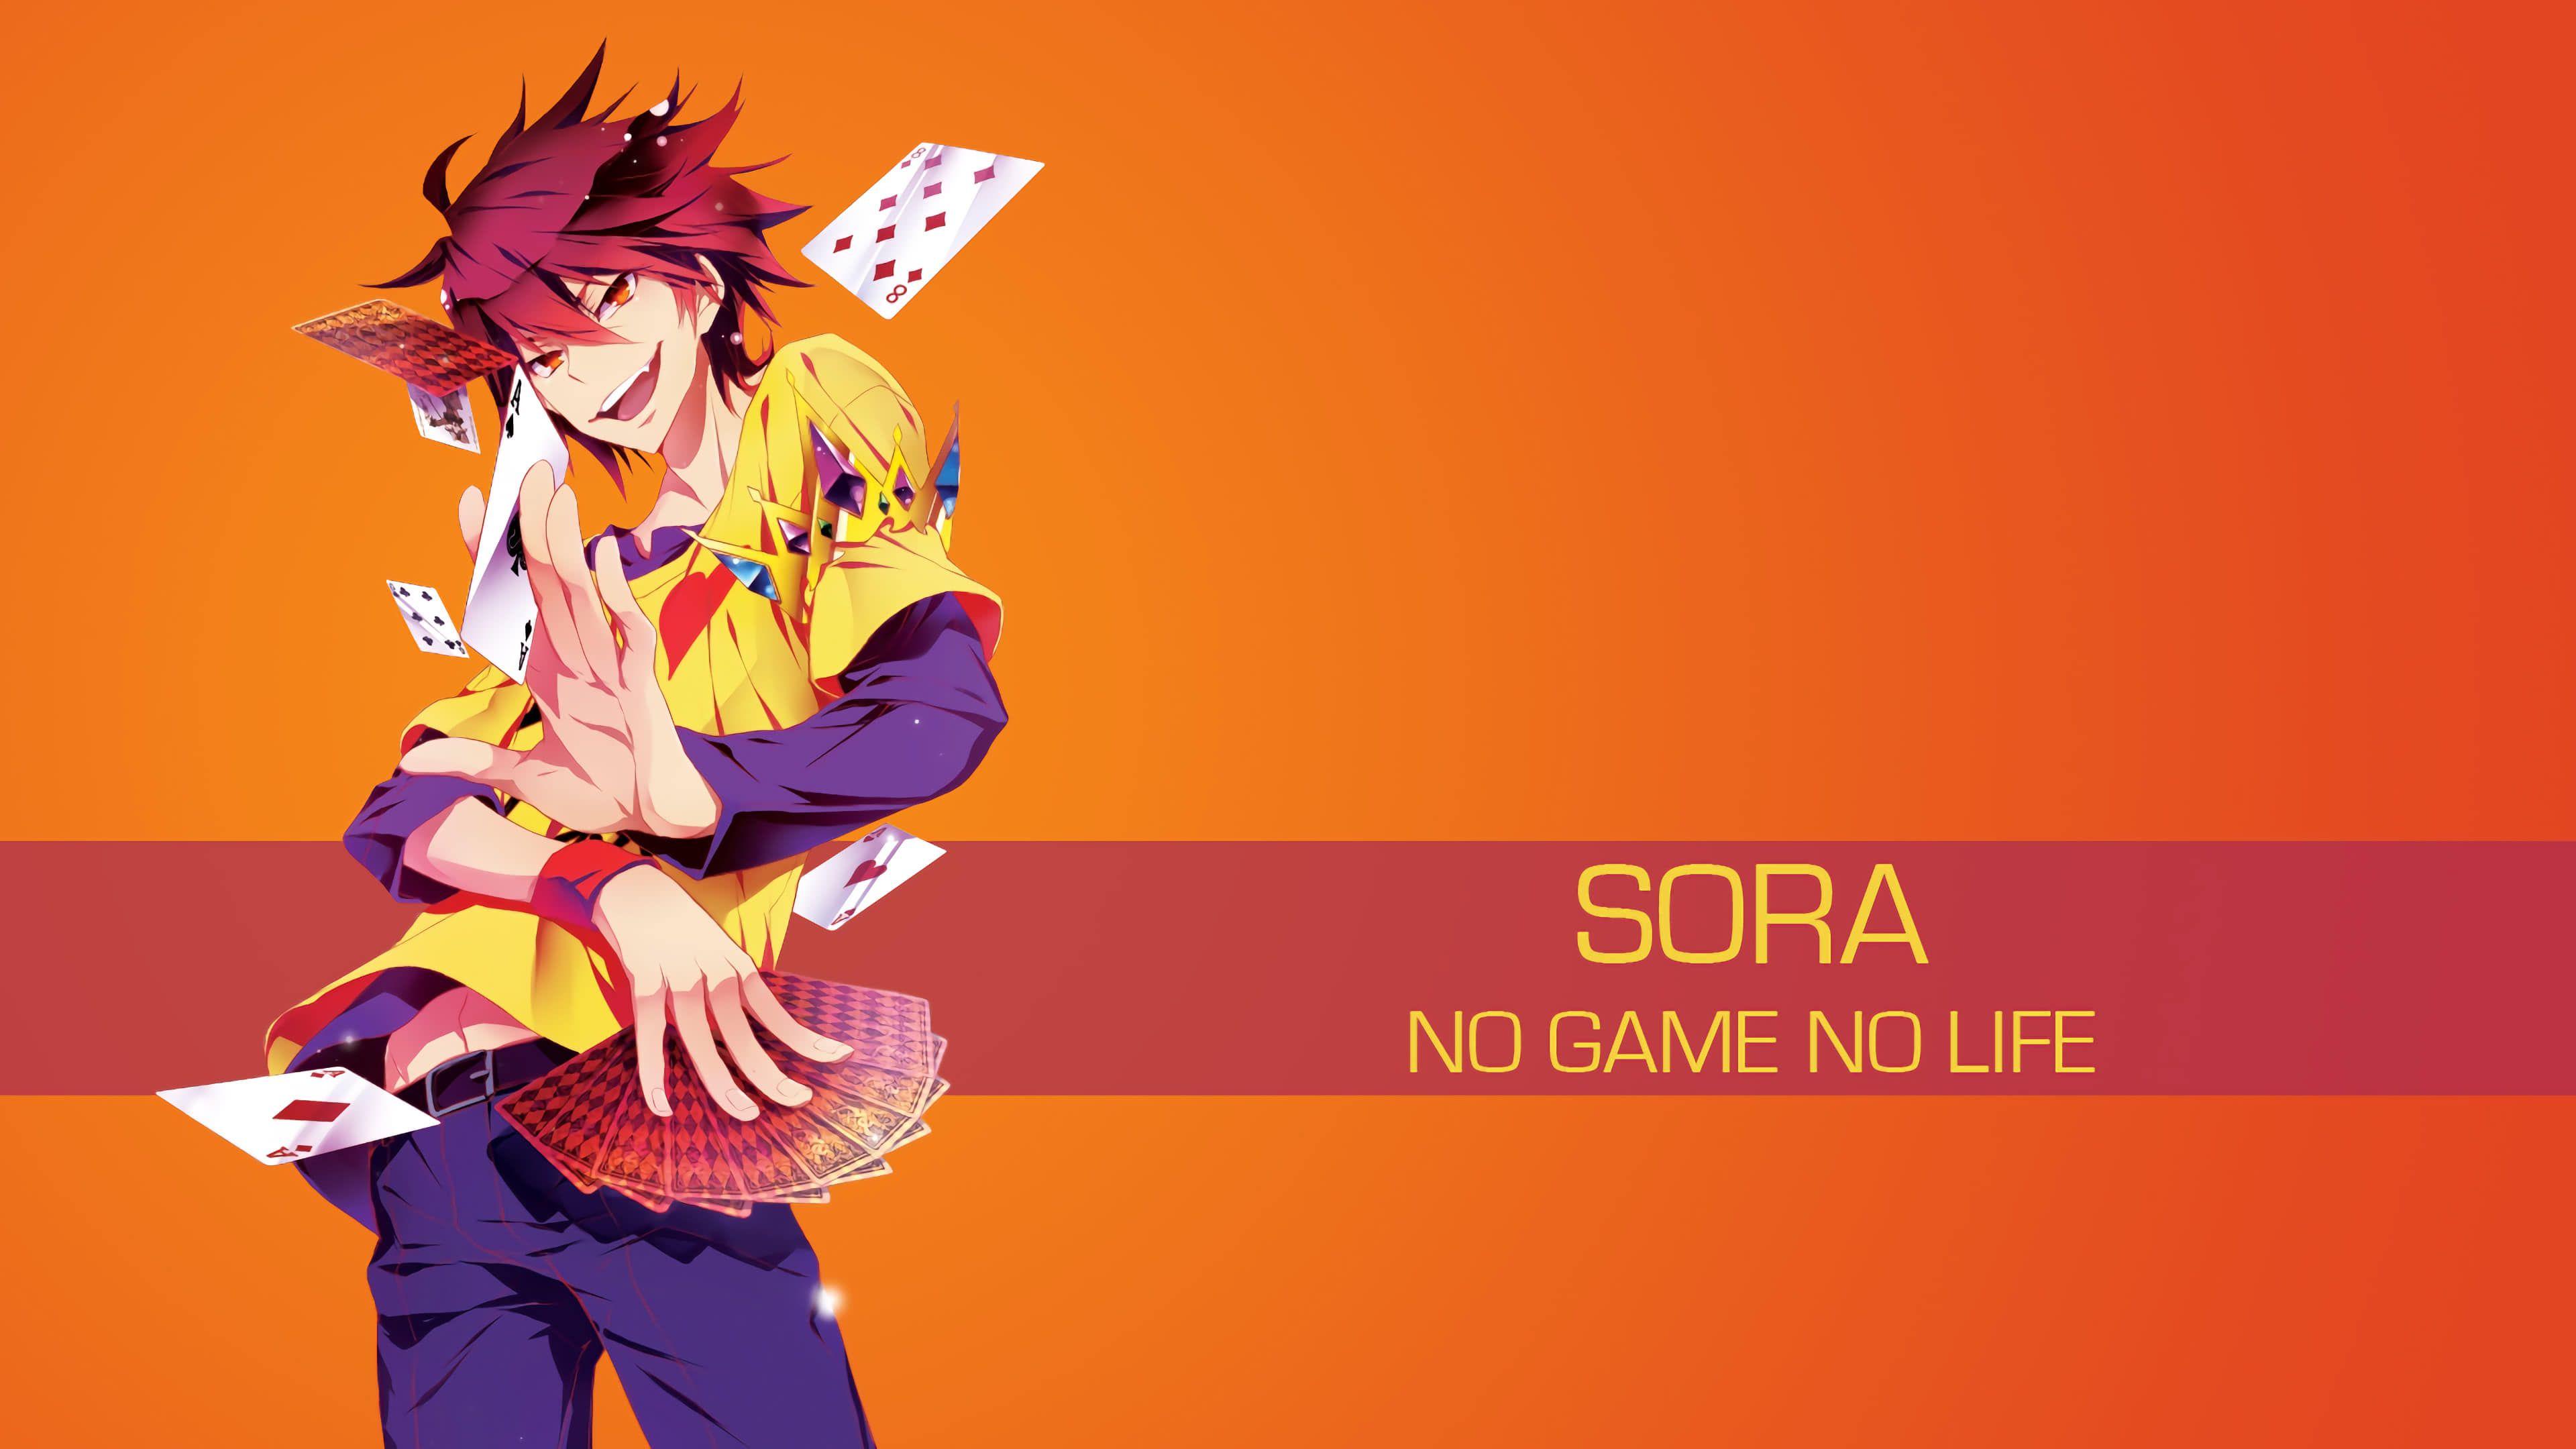 Sora No Game No Life Wallpapers Top Free Sora No Game No Life Backgrounds Wallpaperaccess